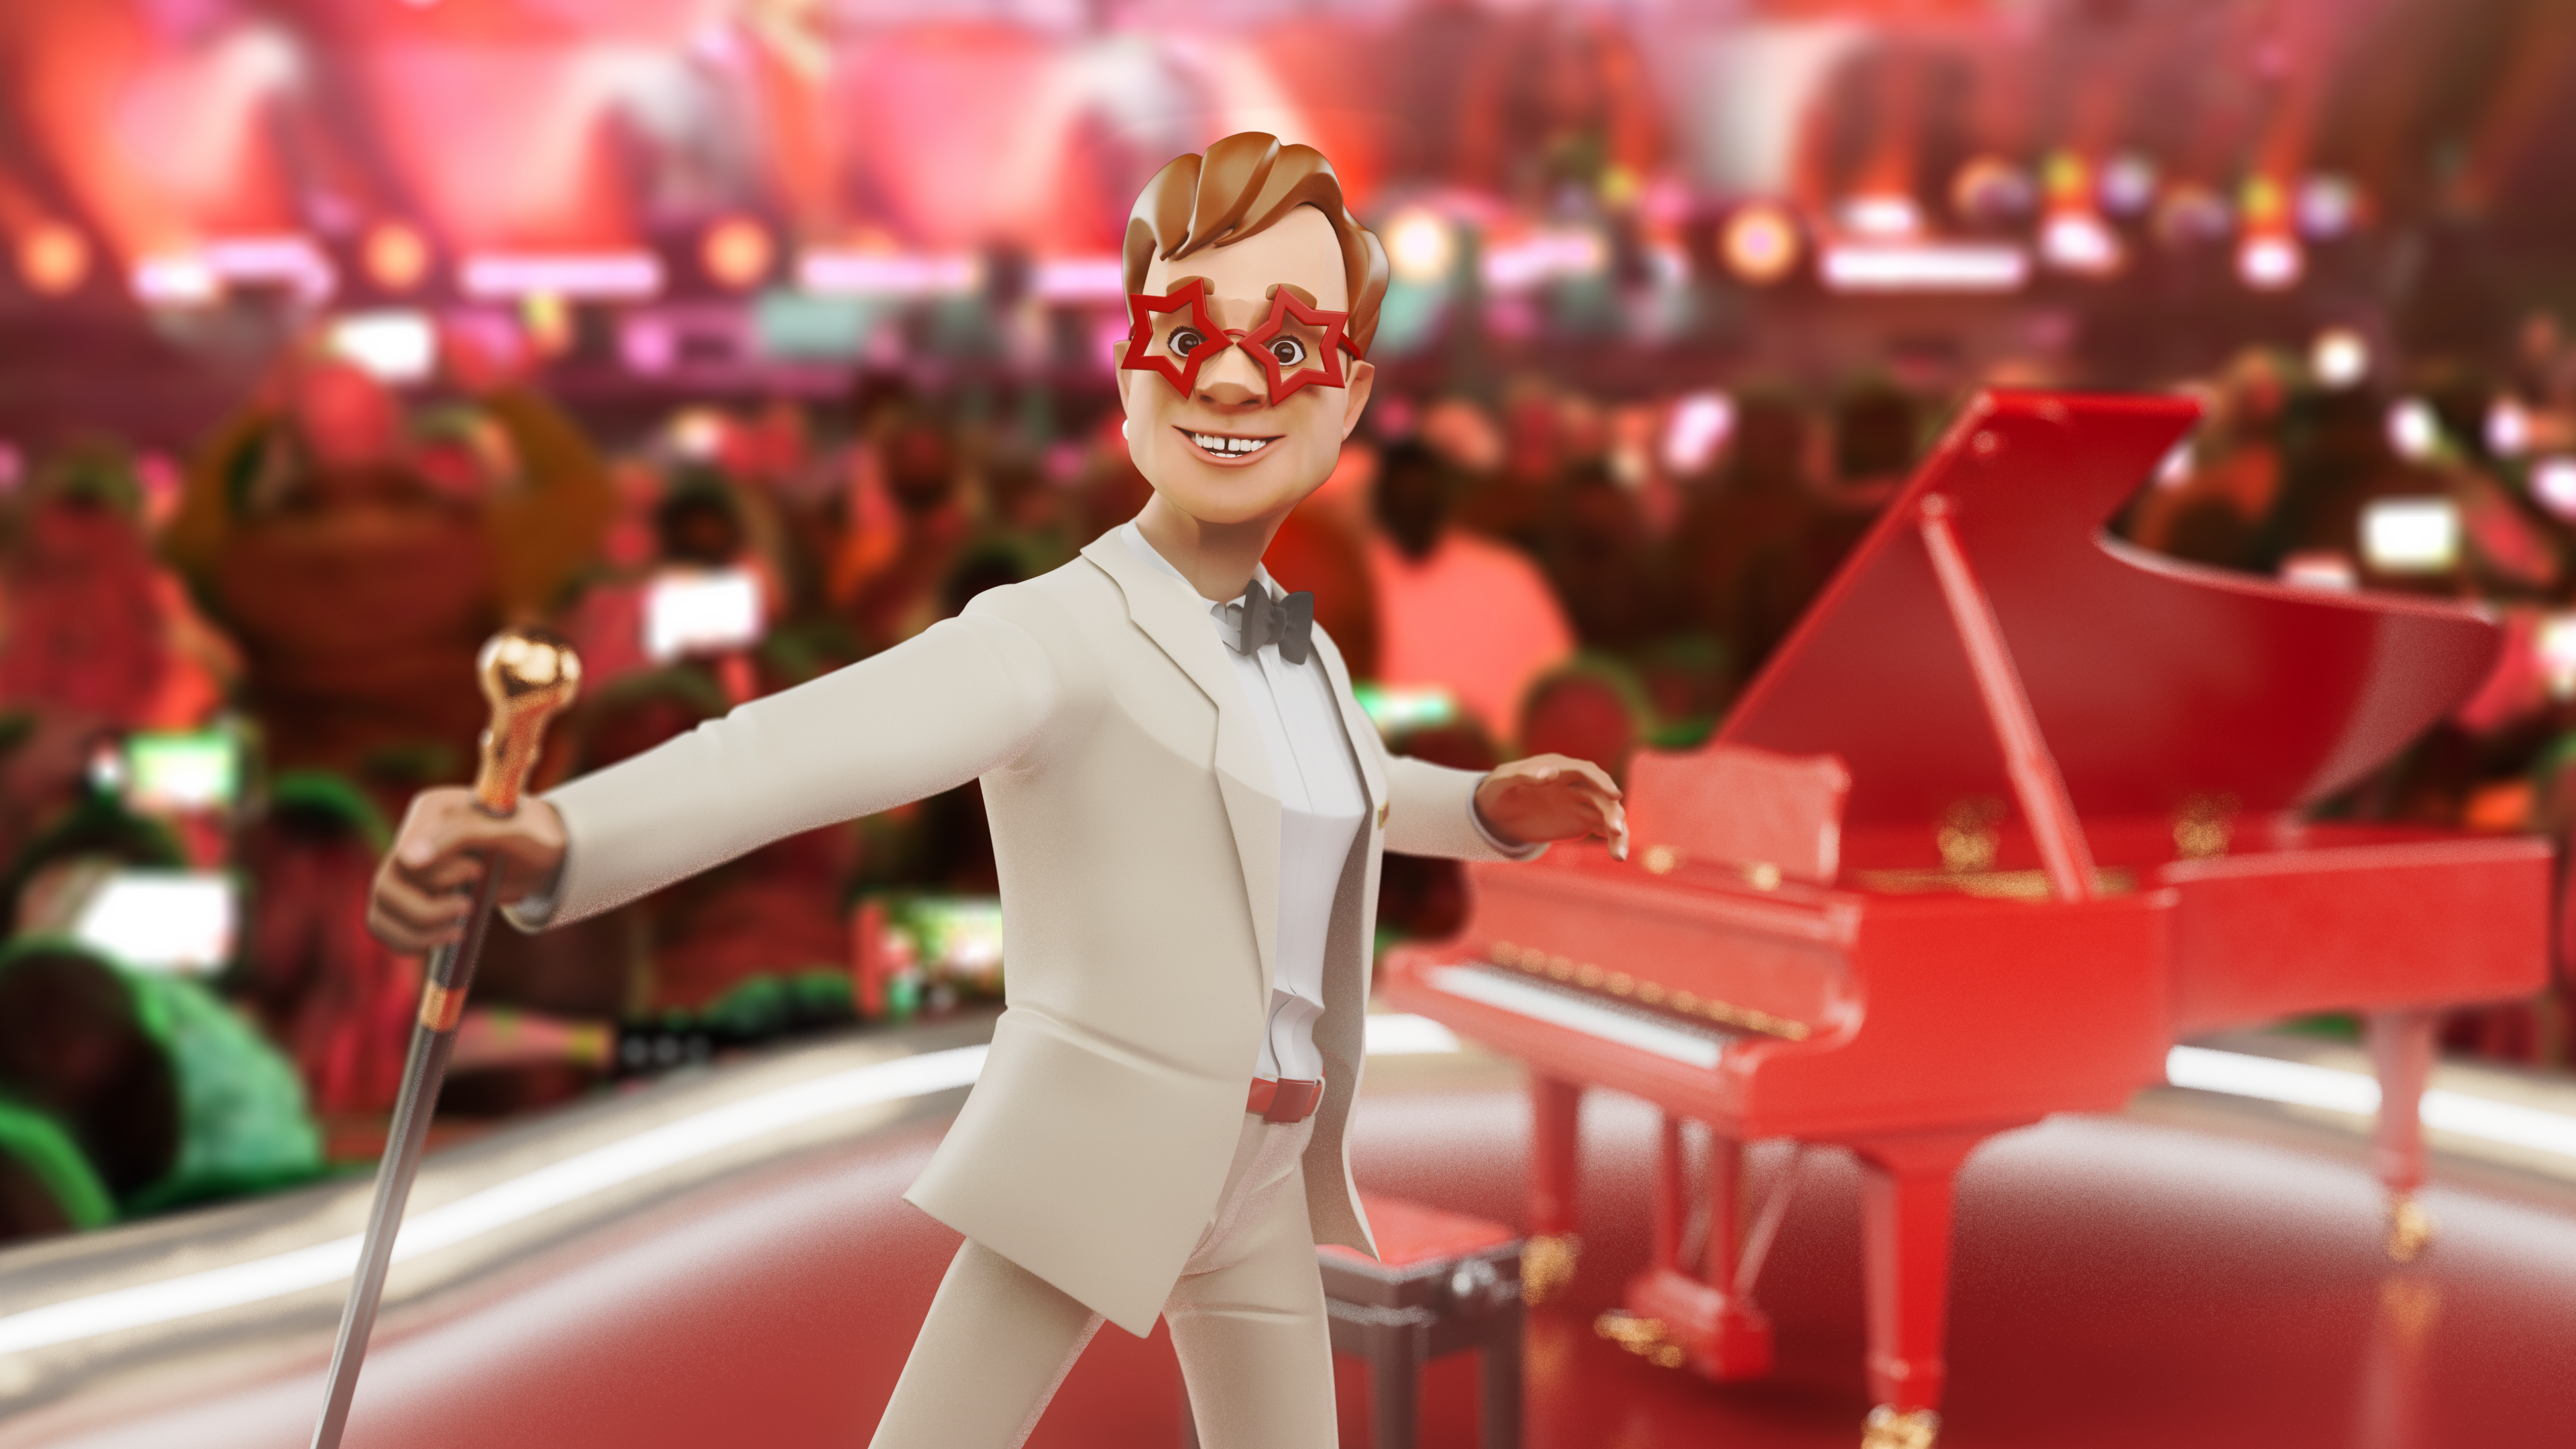 image of the augmented reality miniature version of Elton John from the ‘Elton John X Vodafone’ app